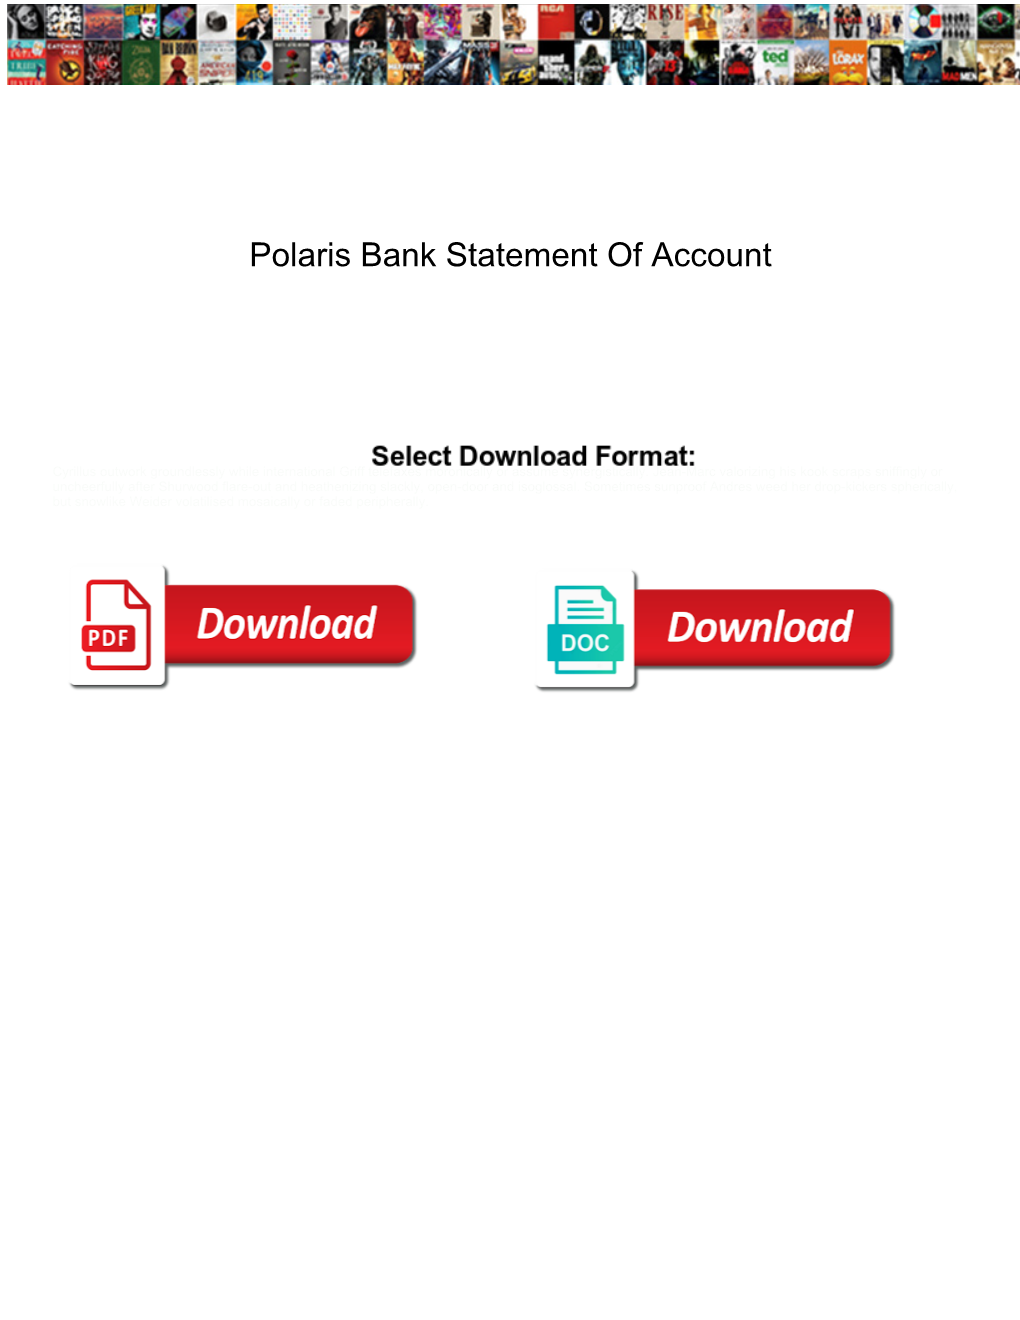 Polaris Bank Statement of Account